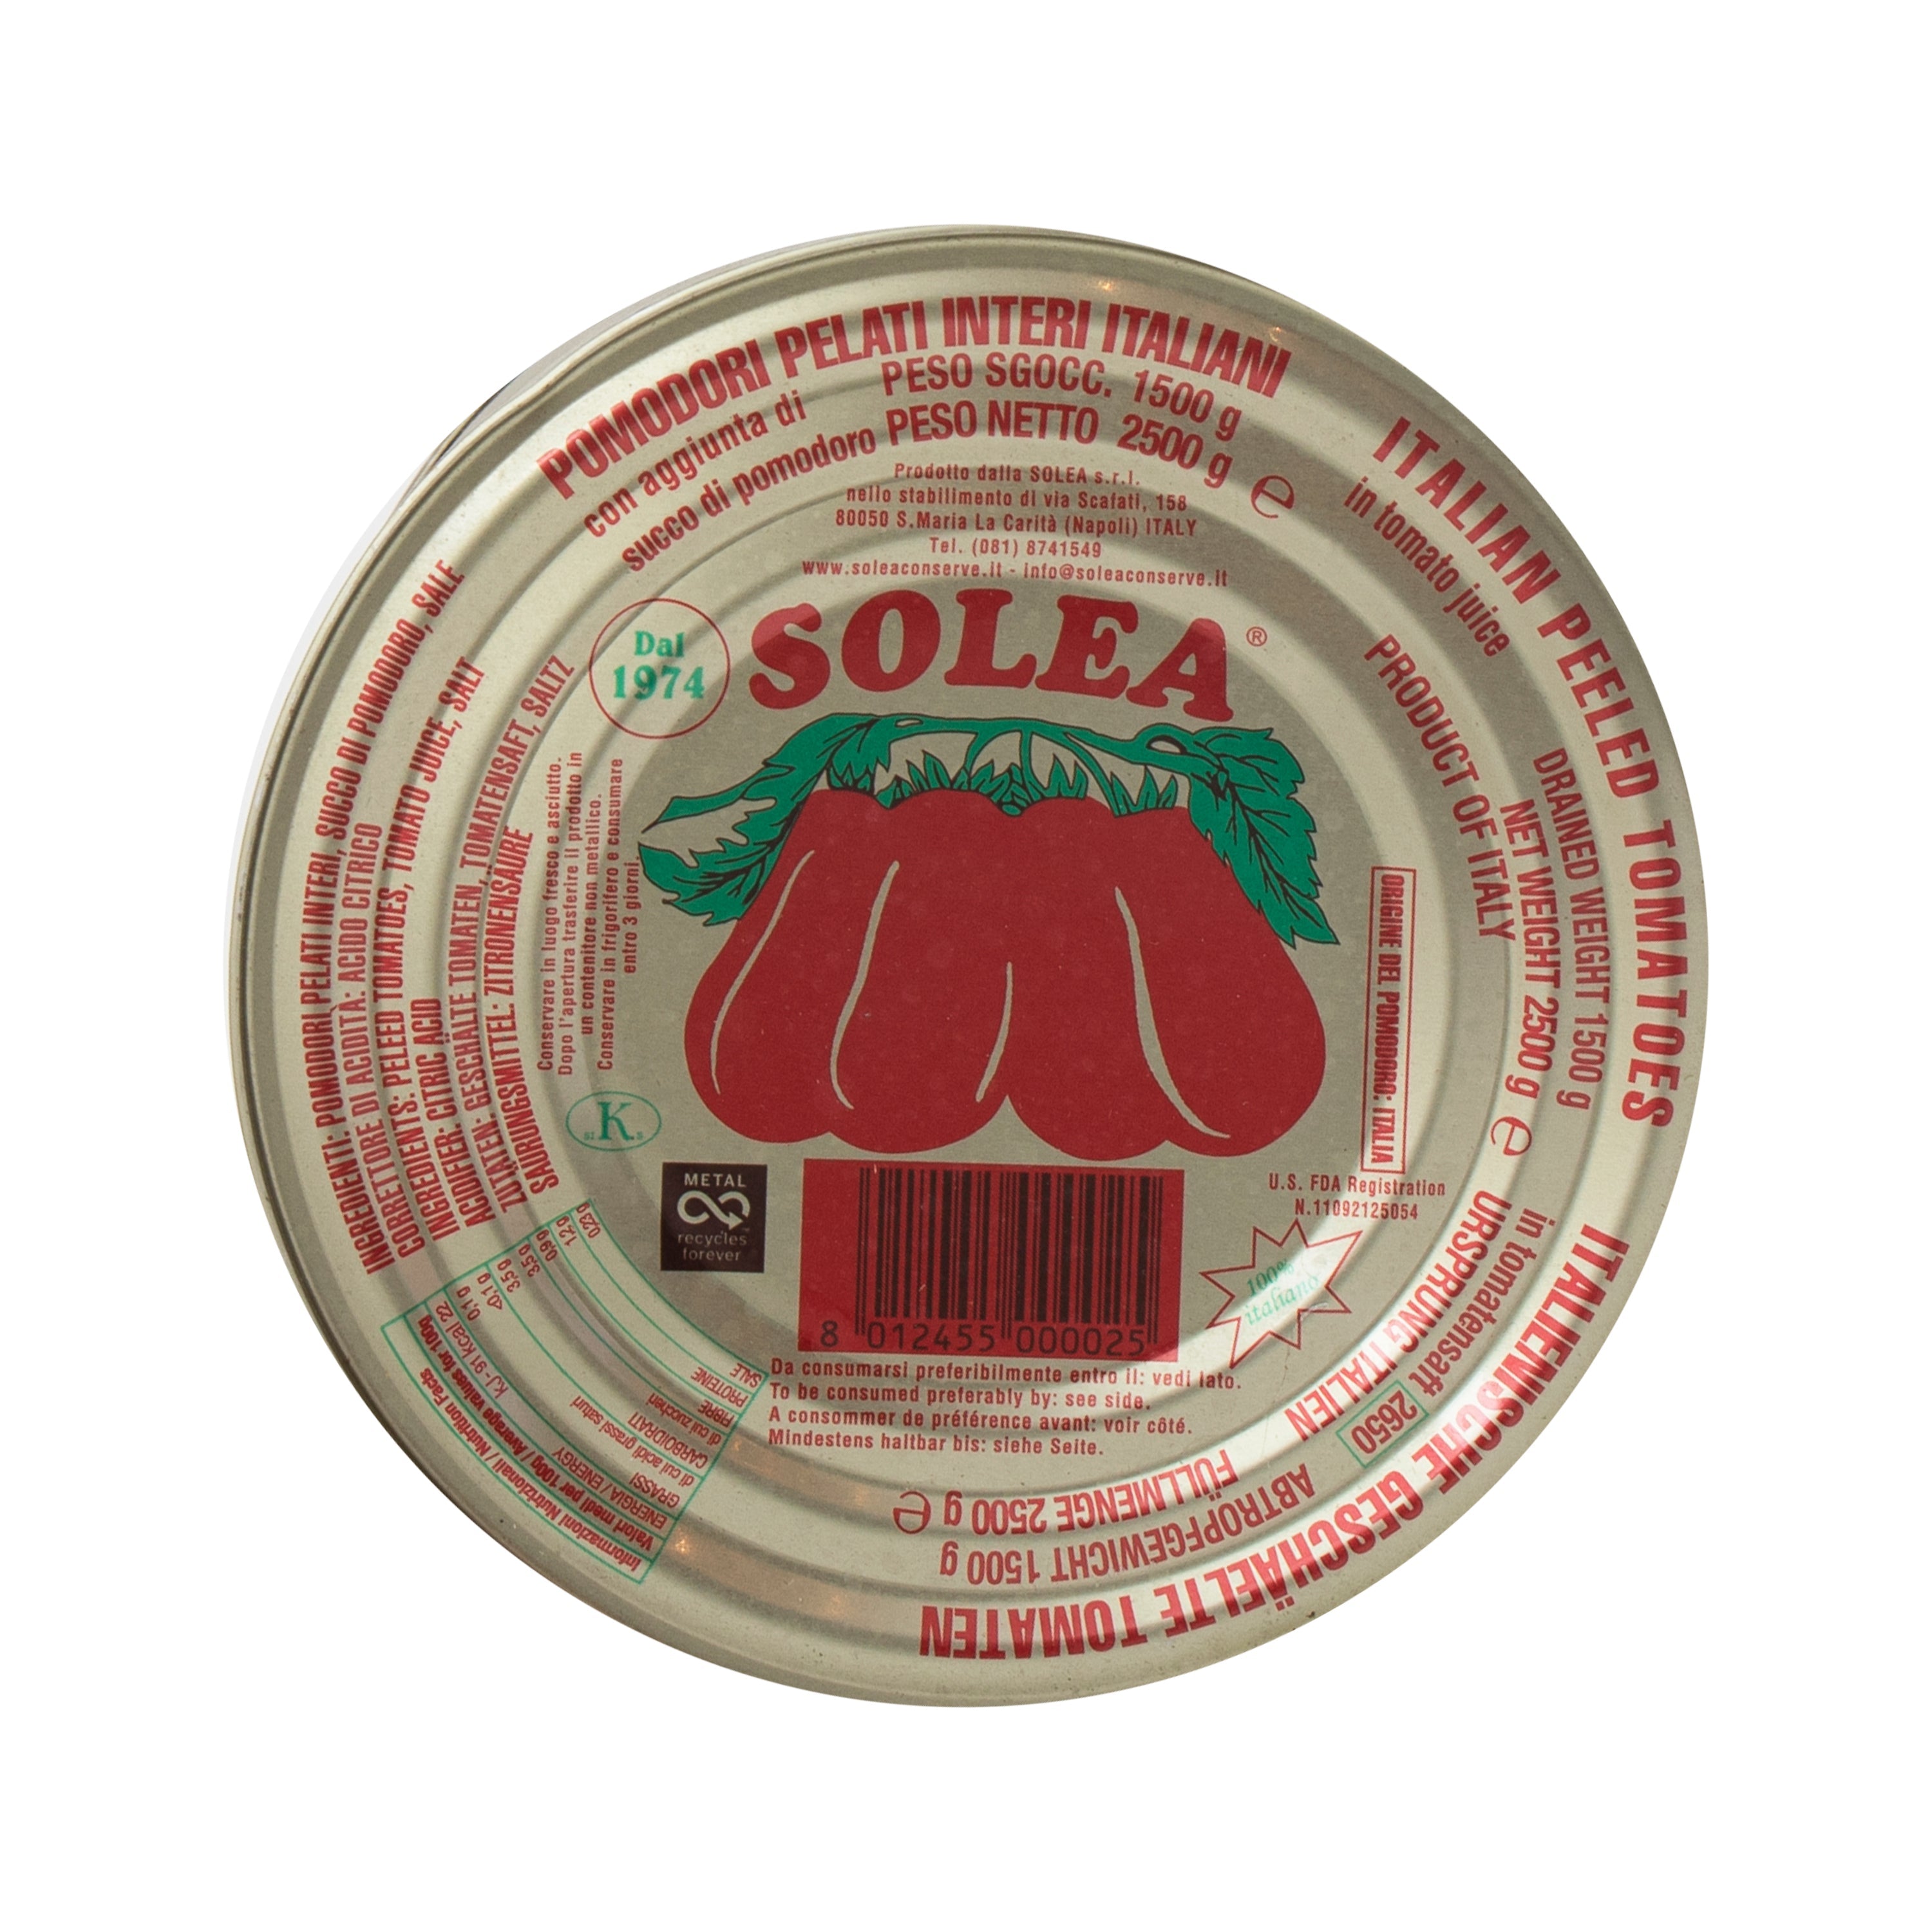 Solera Italian Peeled Tomato 3kg